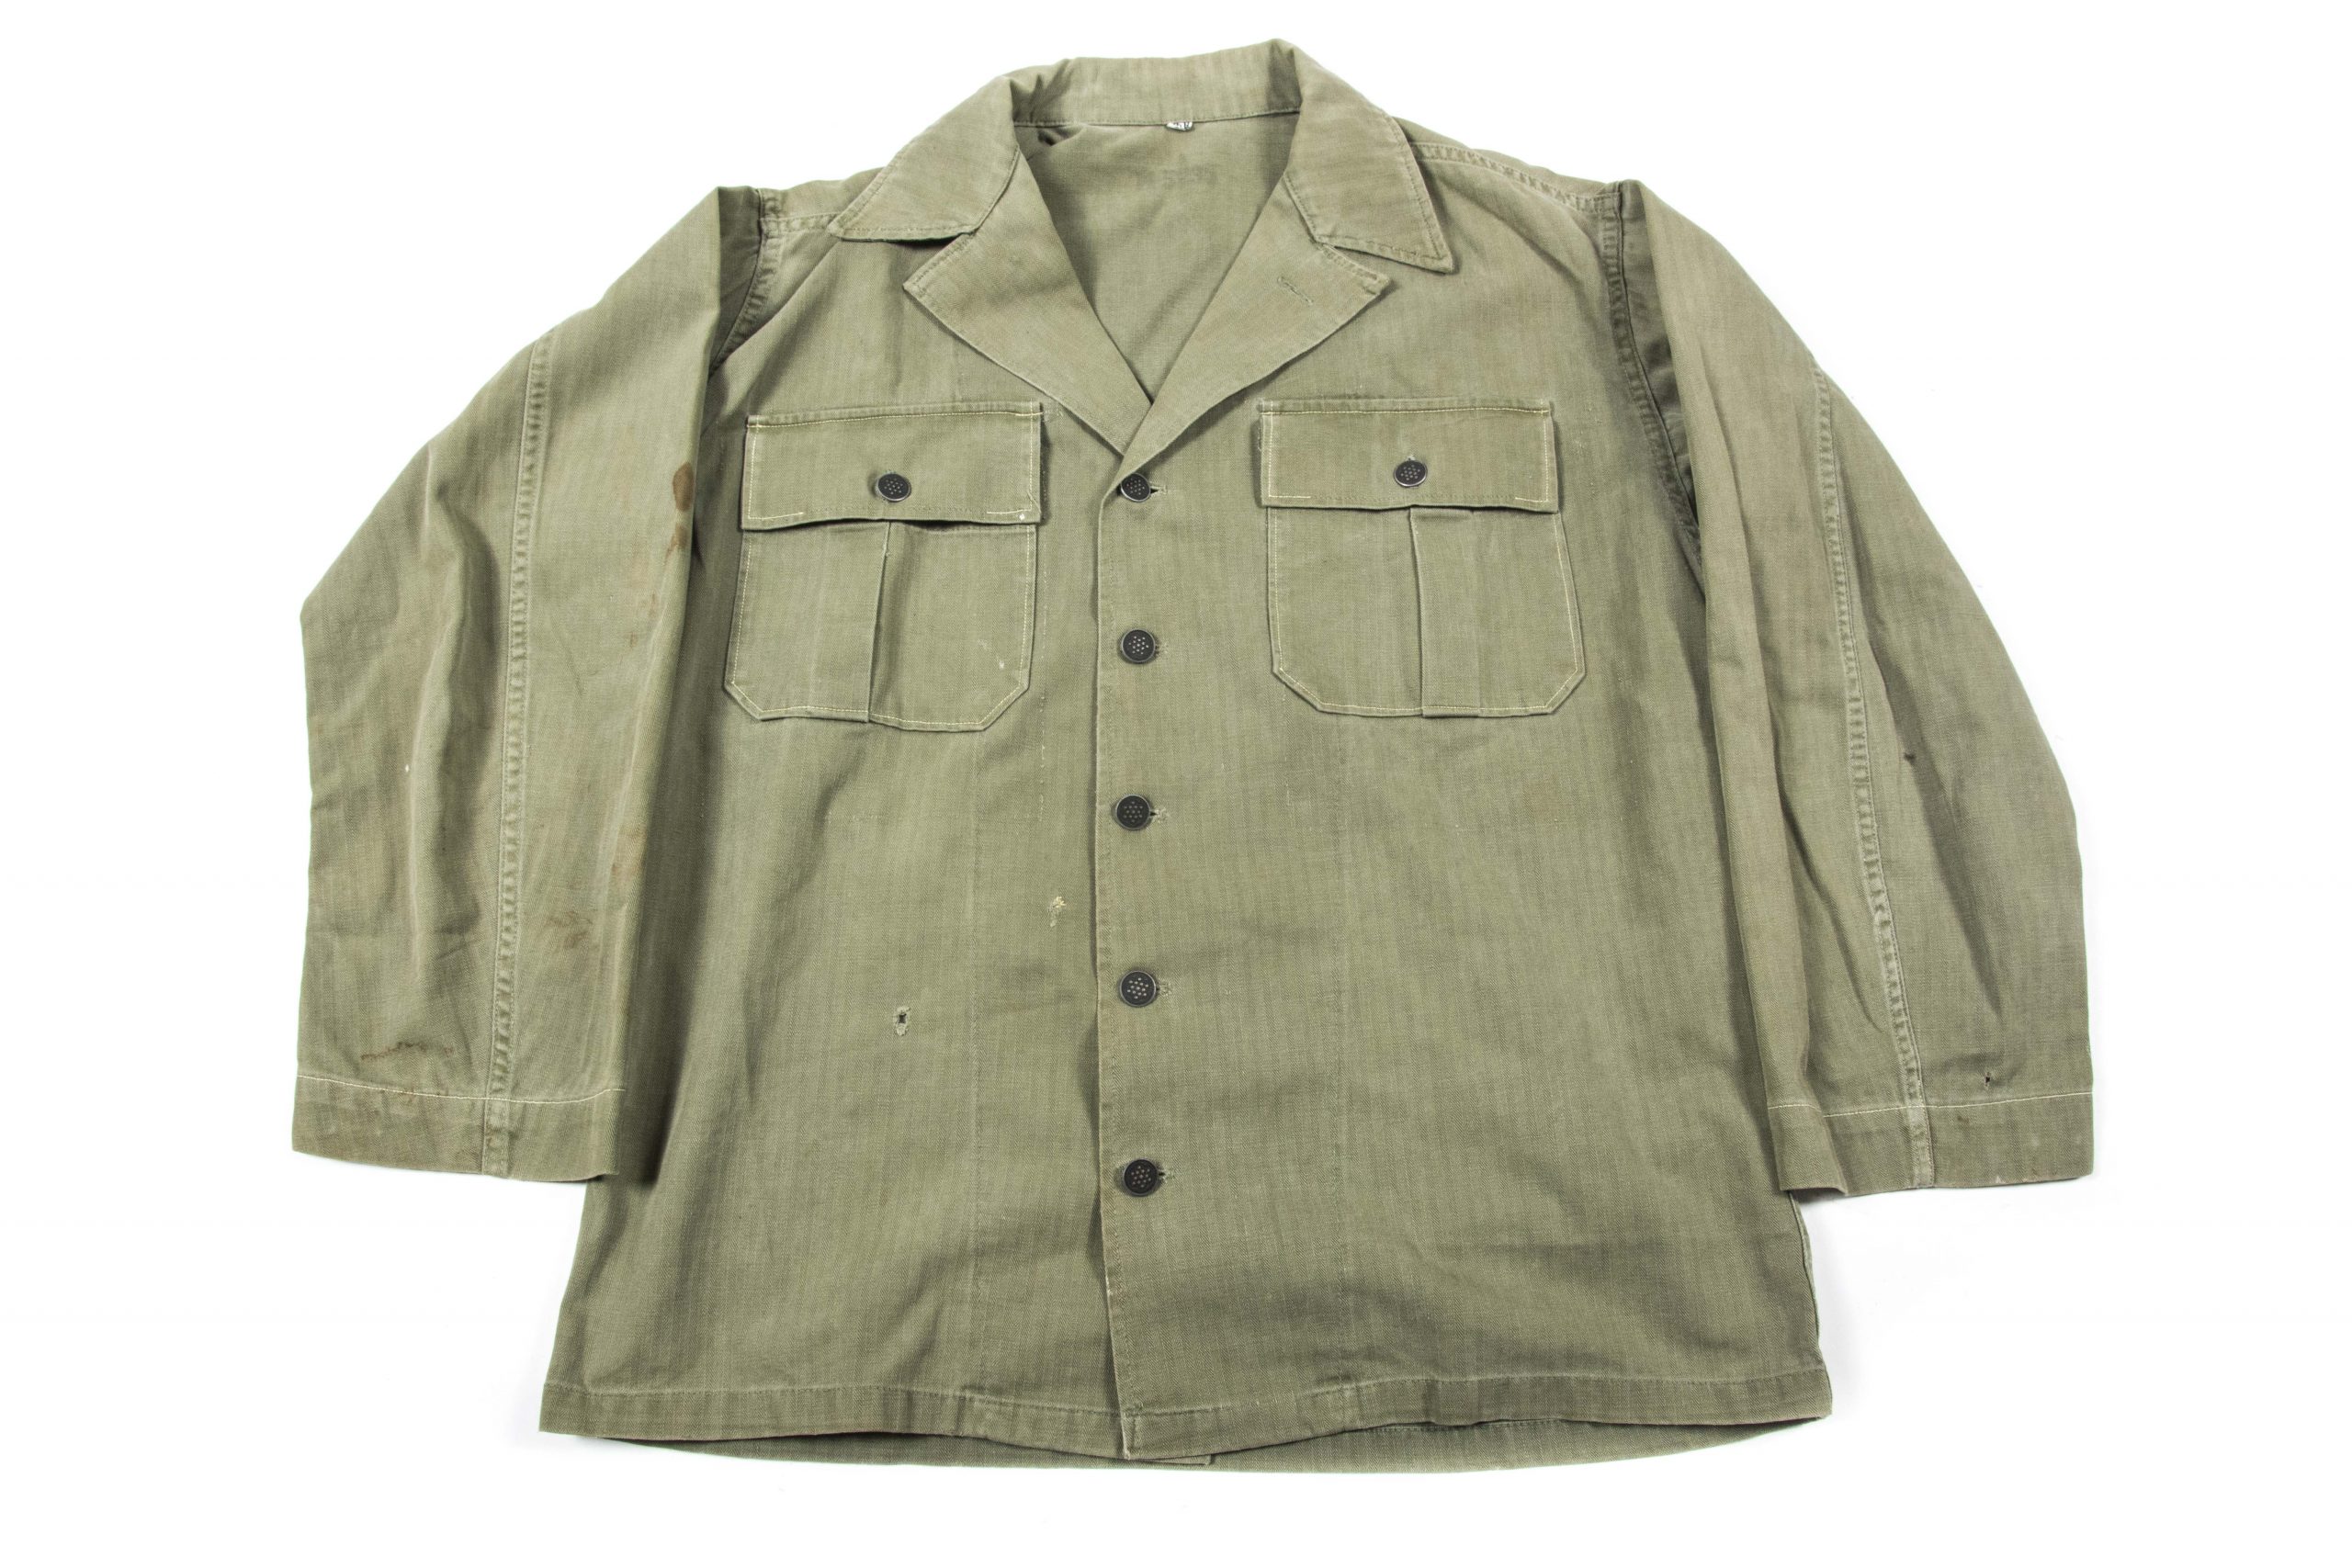 US HBT jacket, pleated pockets, 36R – fjm44